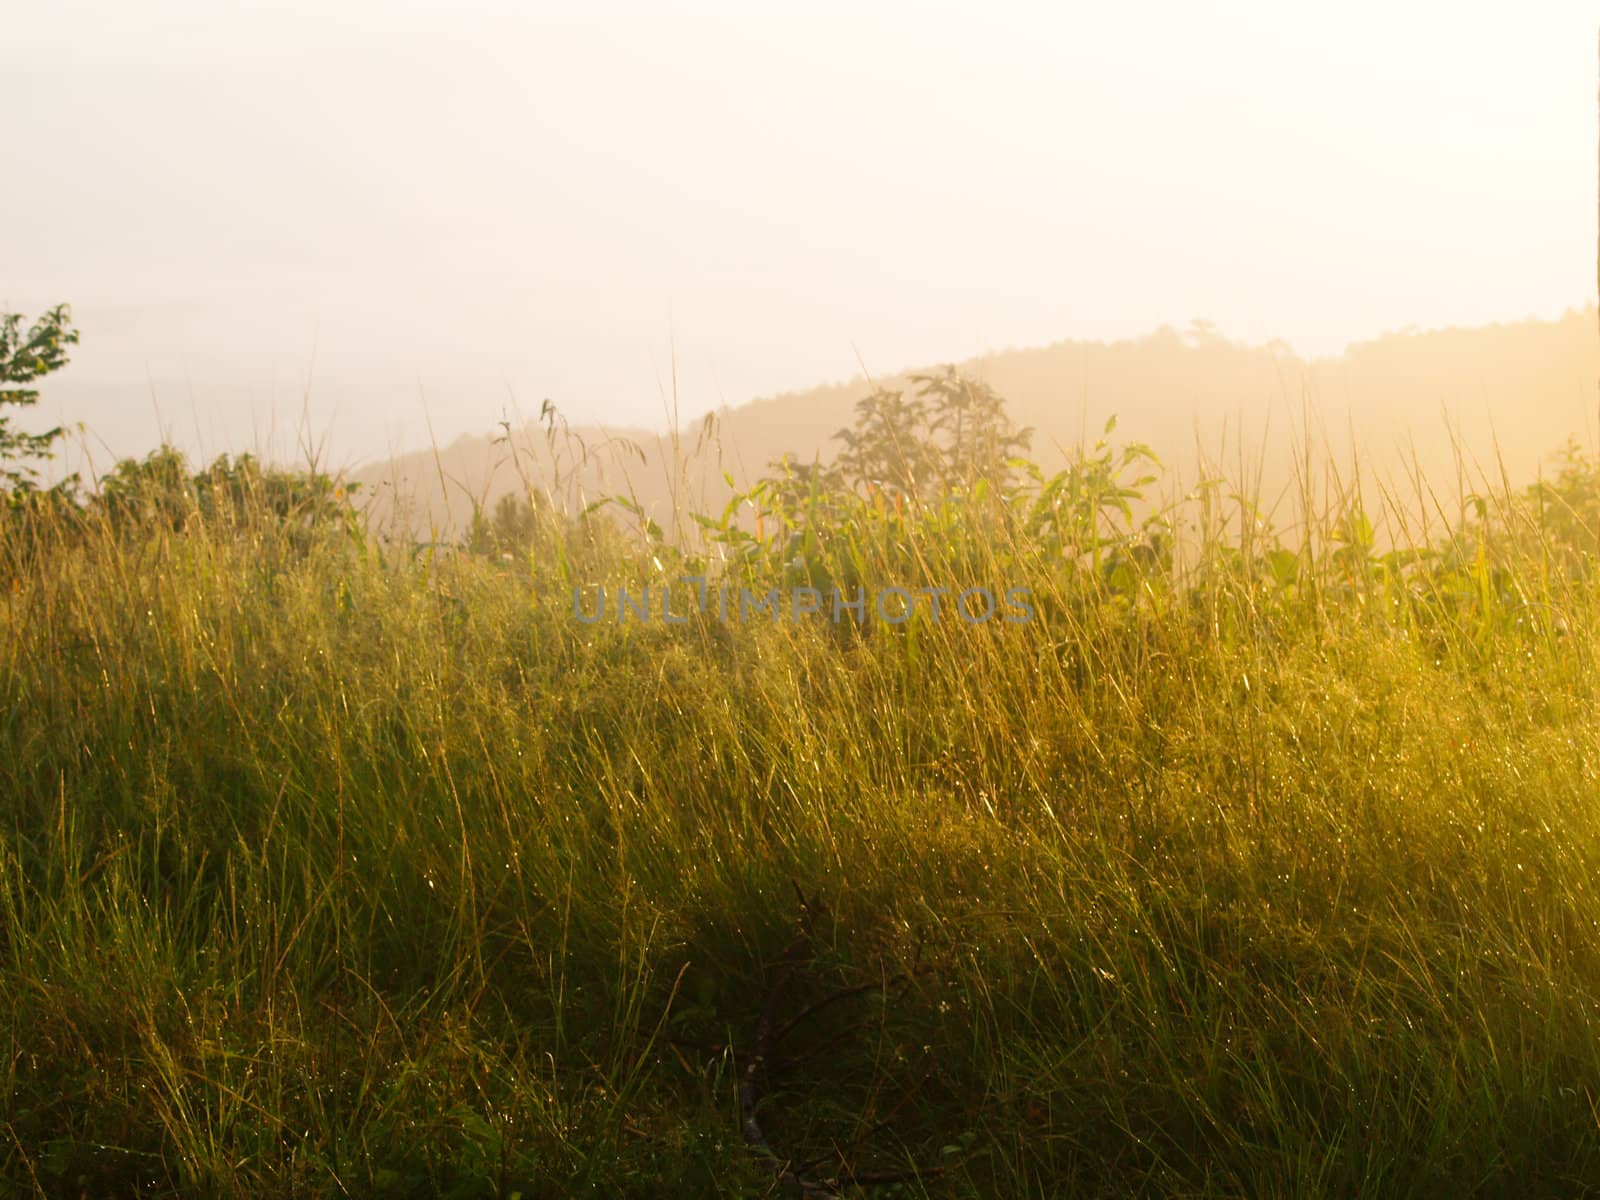 Field of grass during sunrise from Chaeng hill, Chiang rai by gururugu